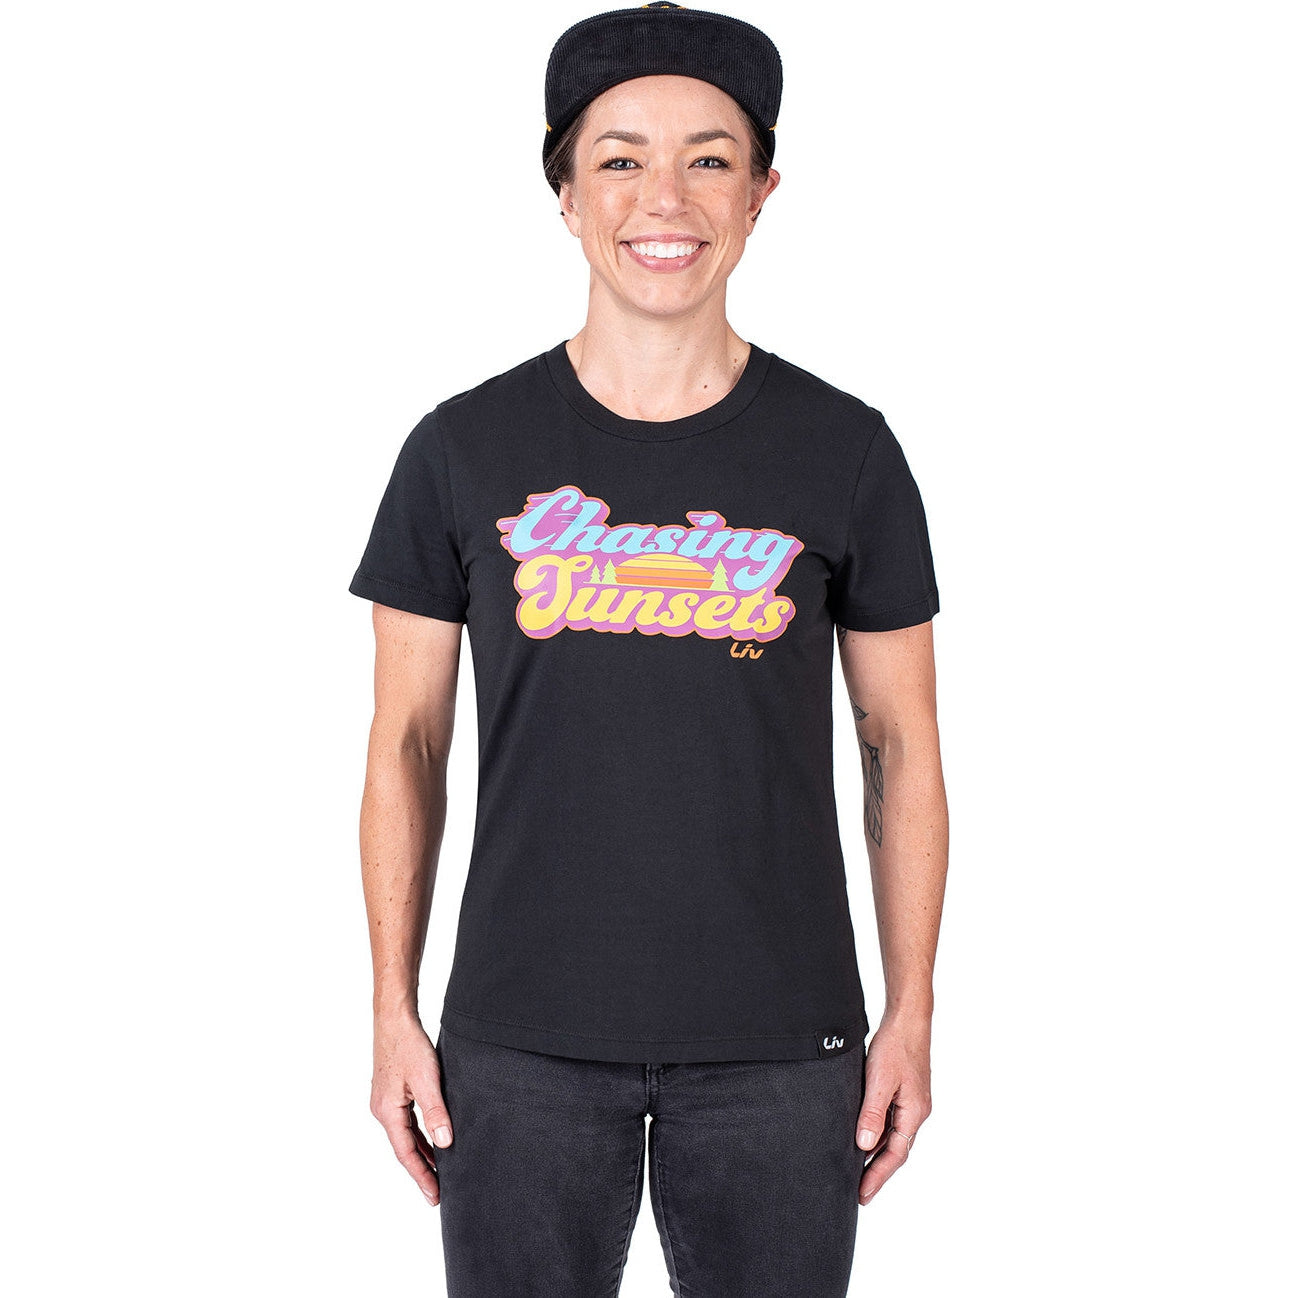 Liv Chasing Sunsets Women's T-Shirt - Jerseys - Bicycle Warehouse